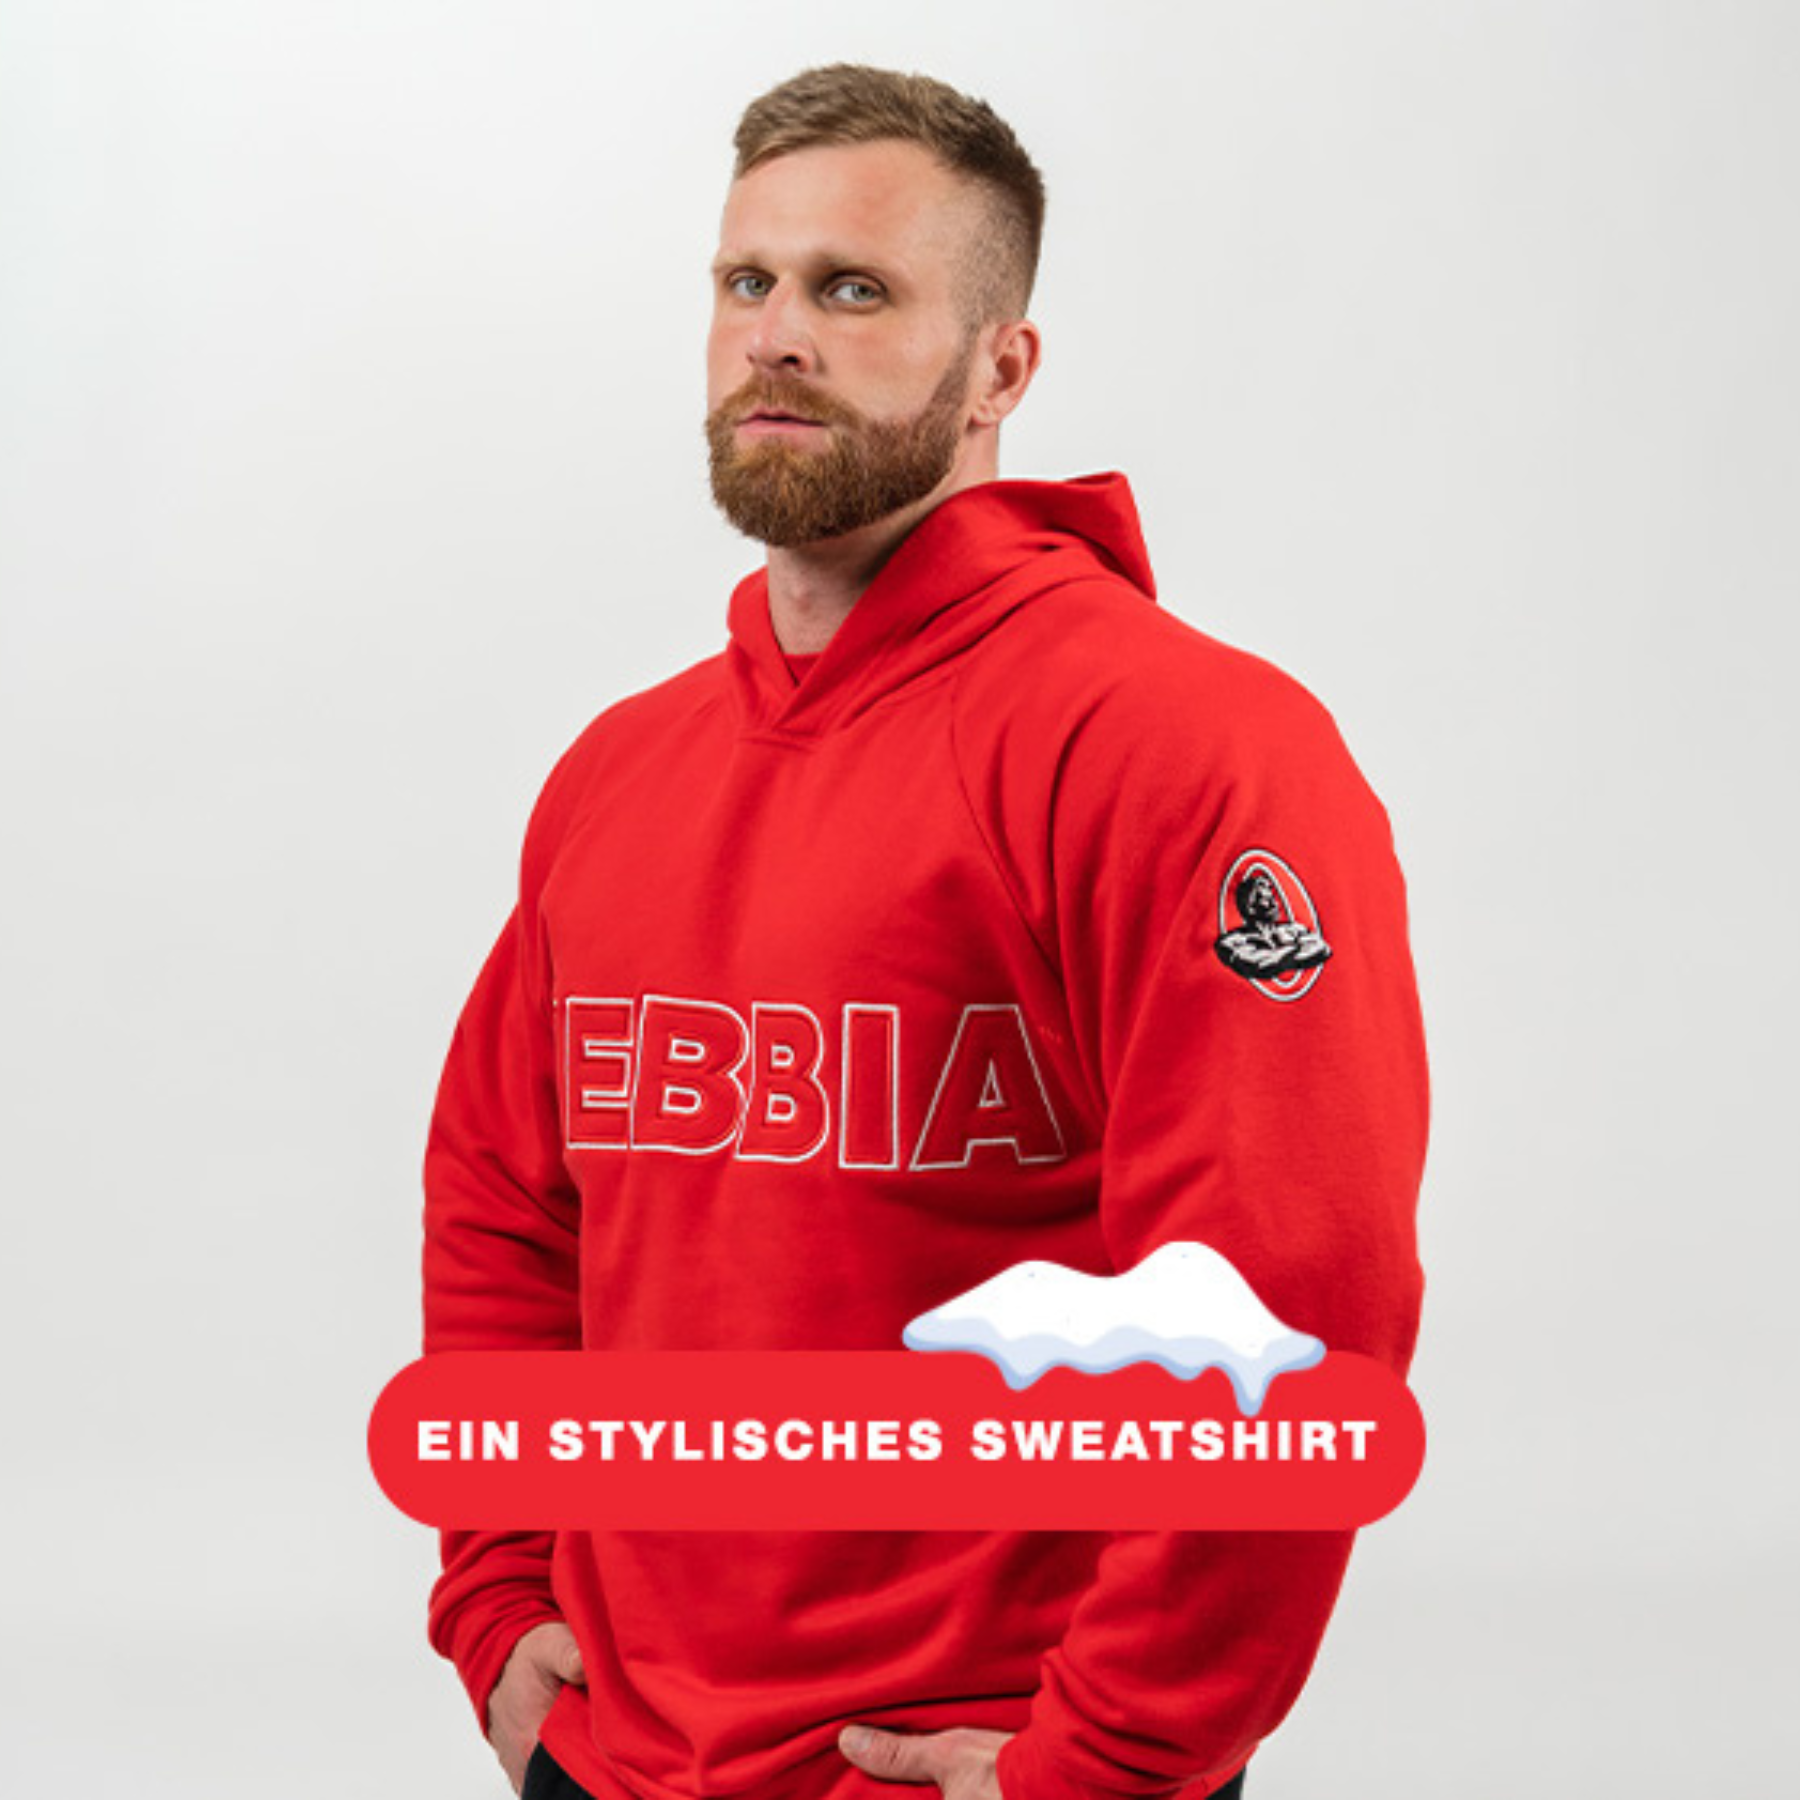 NEBBIA European fitness clothing brand